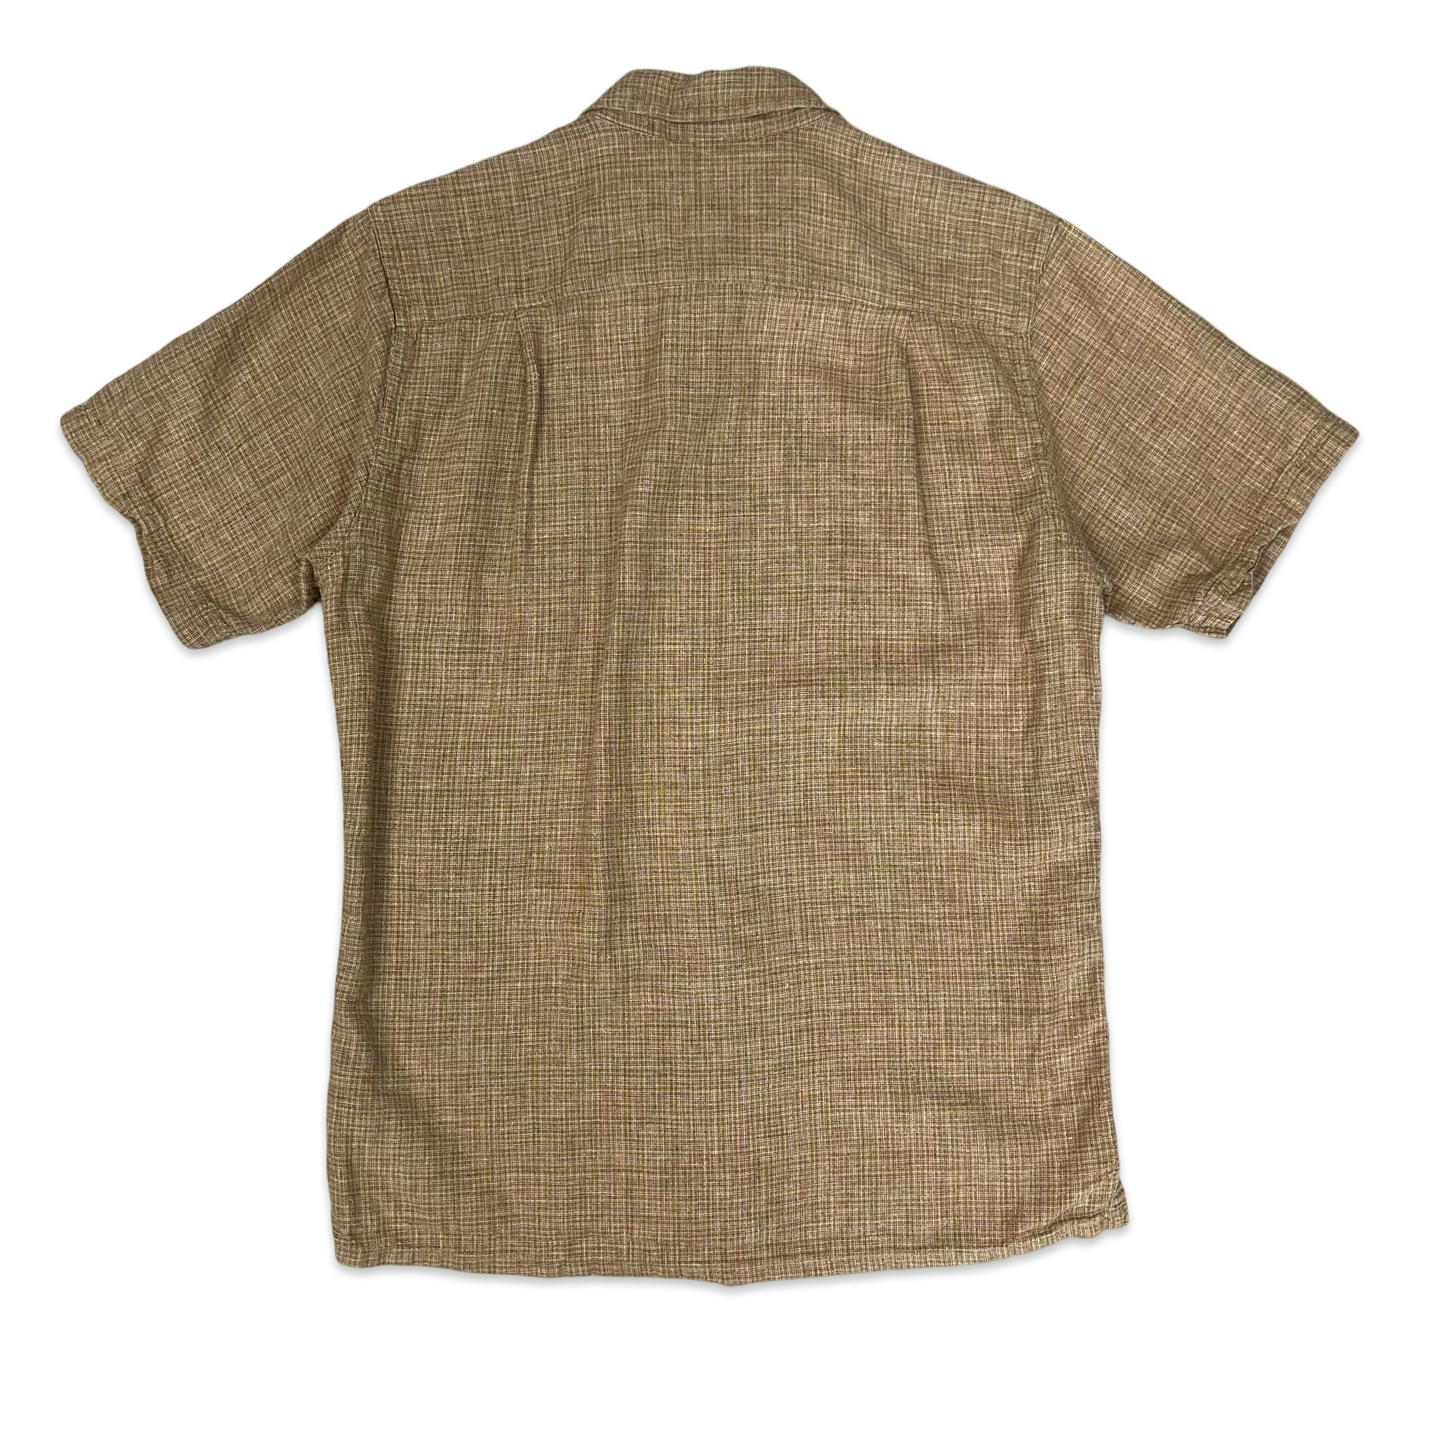 Patagonia Brown Tech Shirt S